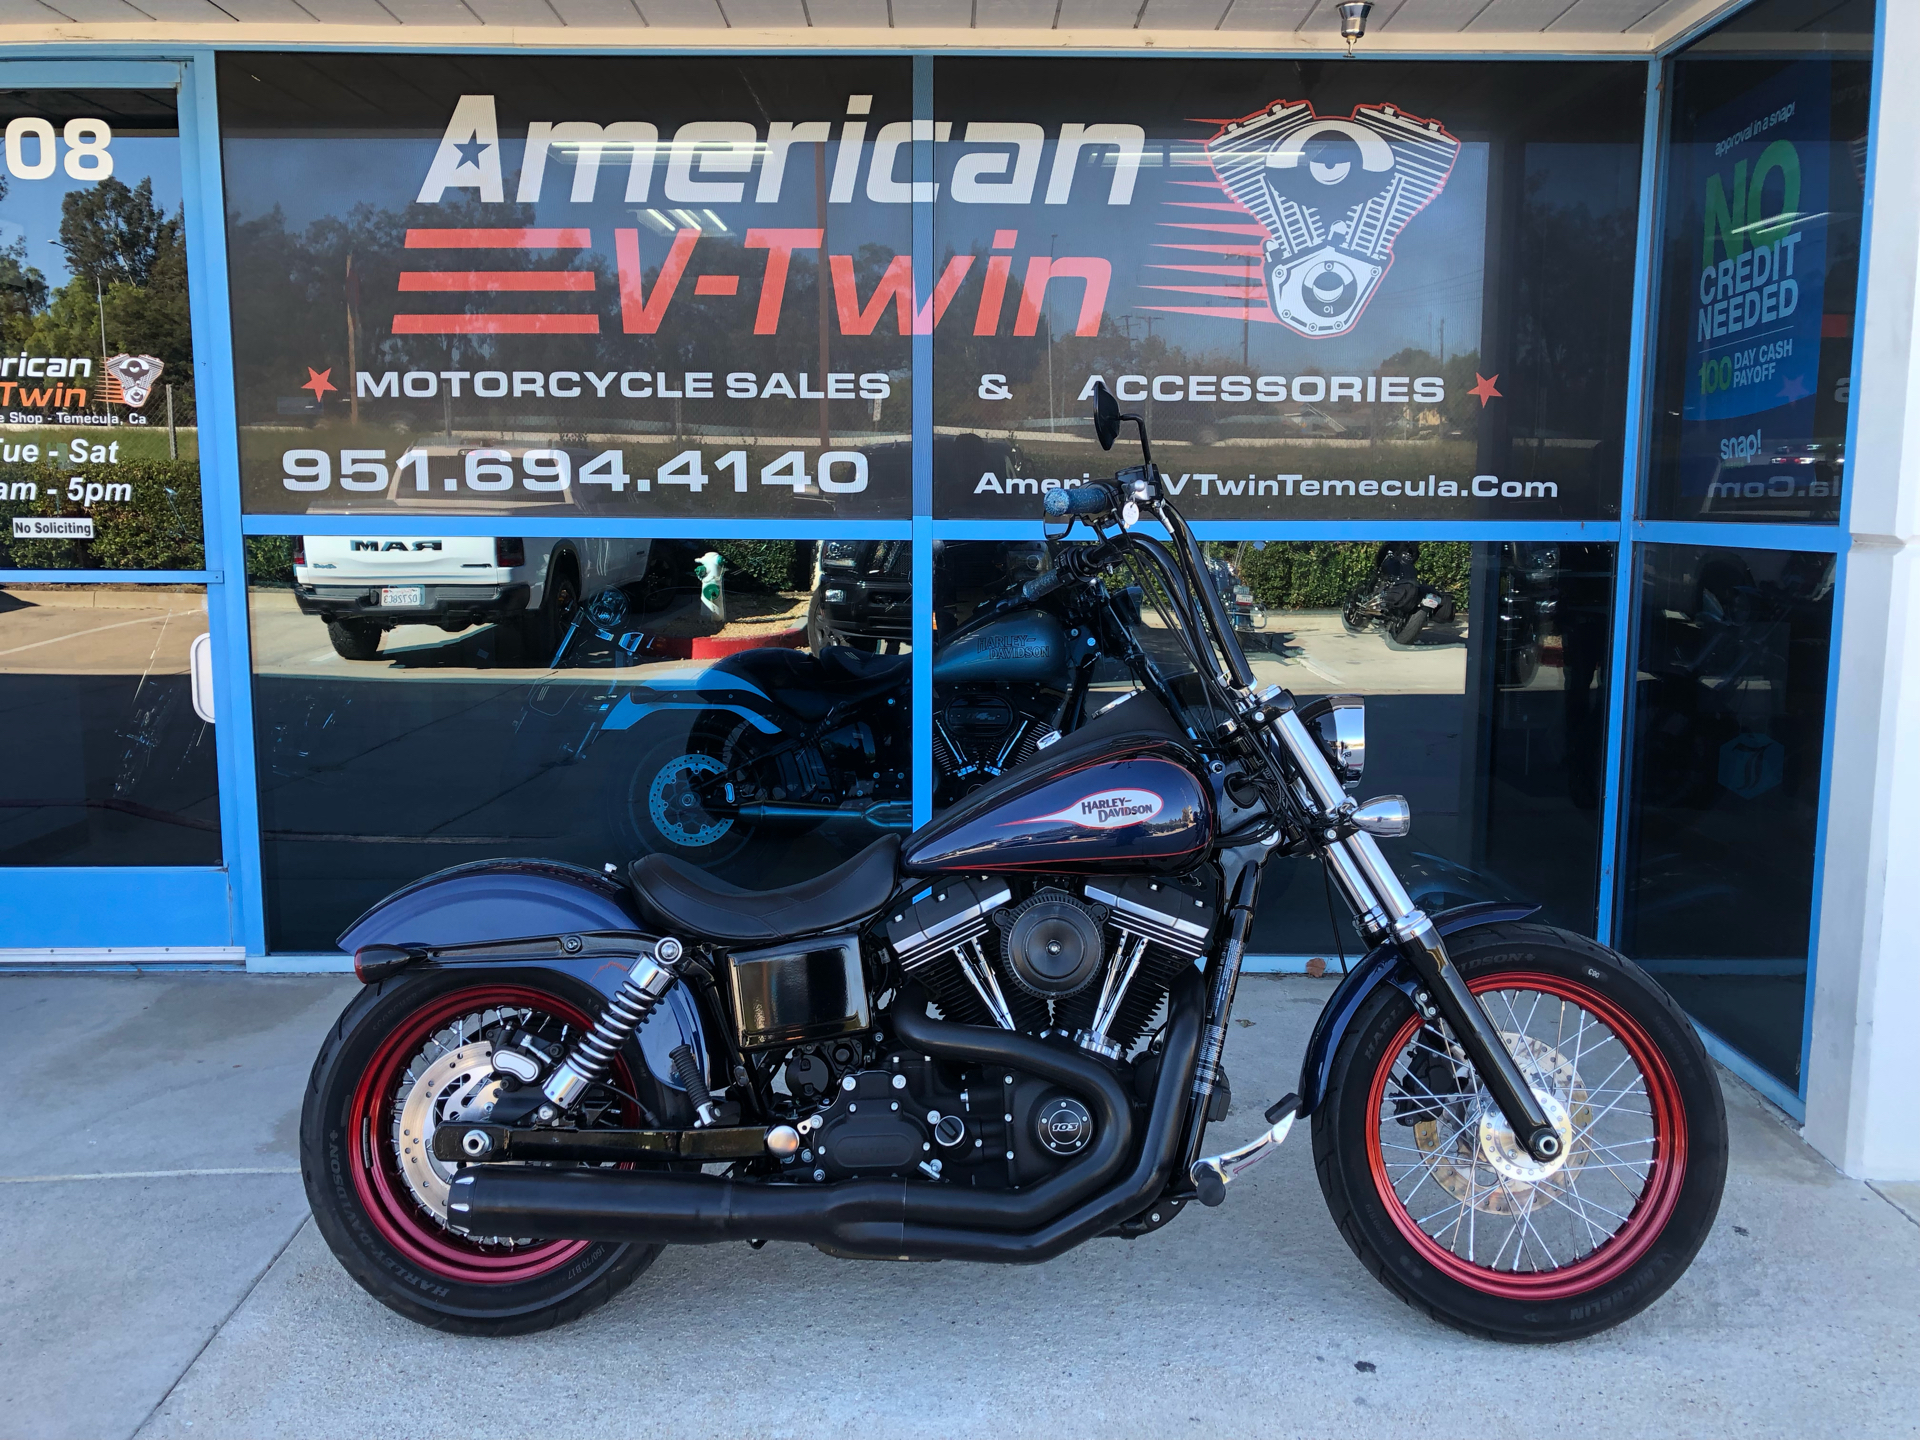 2013 Harley-Davidson Dyna® Street Bob® in Temecula, California - Photo 2